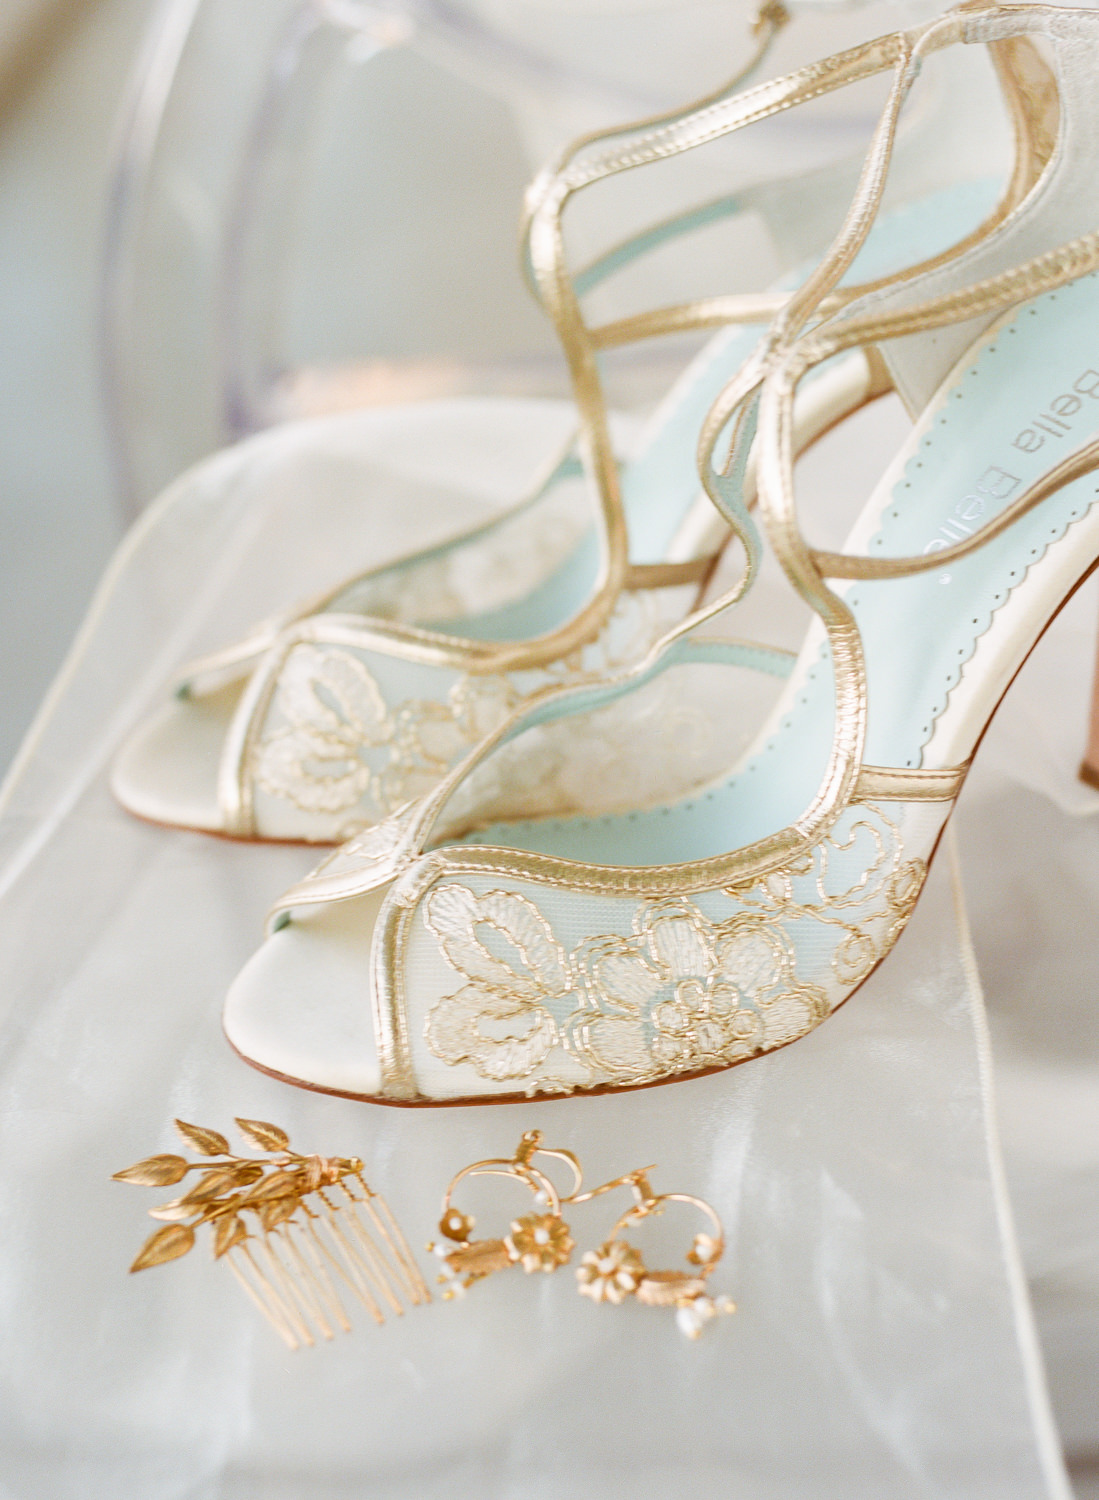 Lietofiore gold accessories, Bella Belle wedding shoes, Erica Robnett Photography